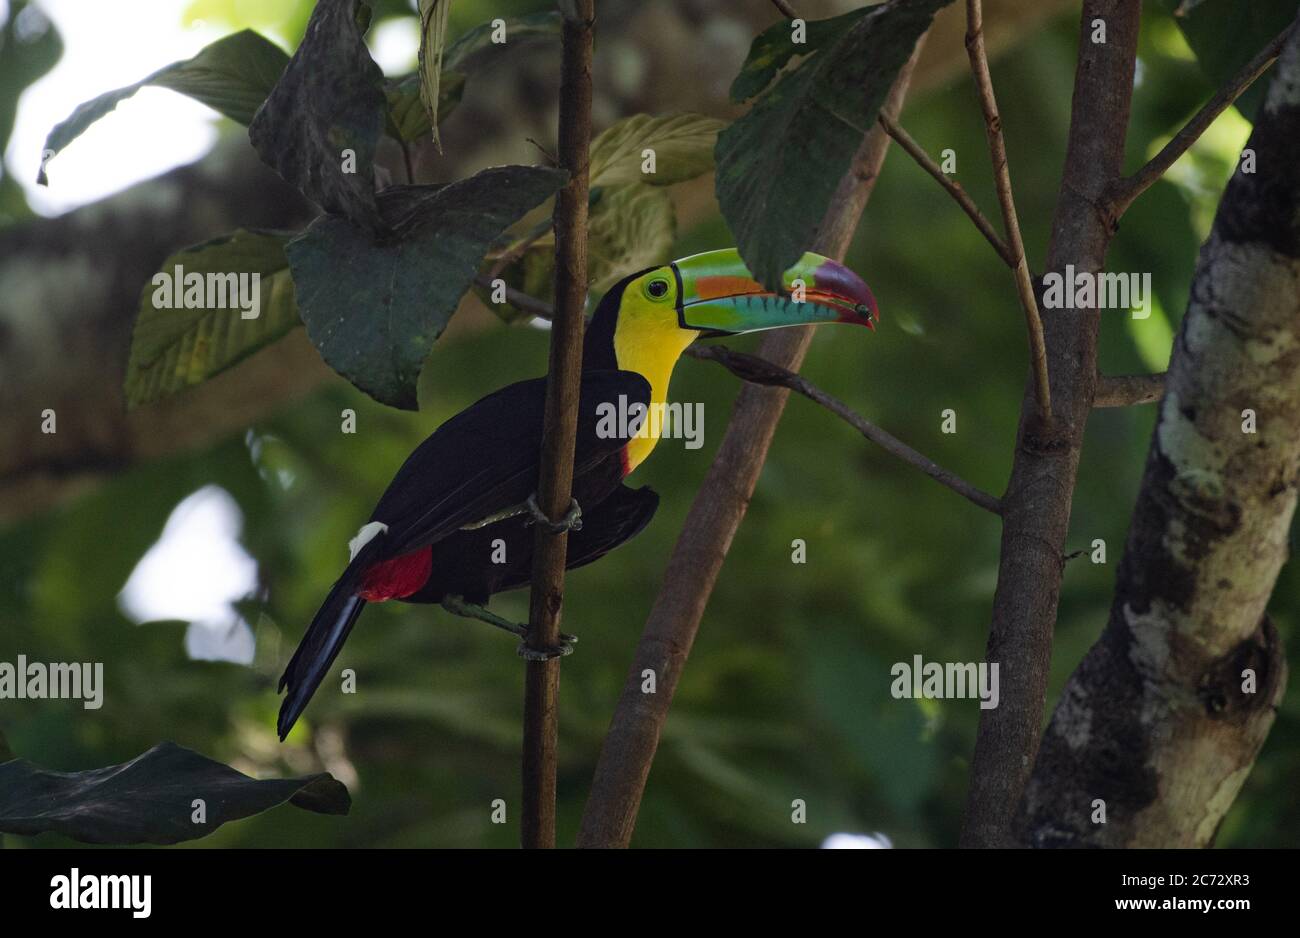 Keel-billed toucan, Ramphastos sulfuratus, sulfur-breasted toucan, rainbow-billed toucan, beautiful colorful bird sittin on tree branch eating fruit Stock Photo